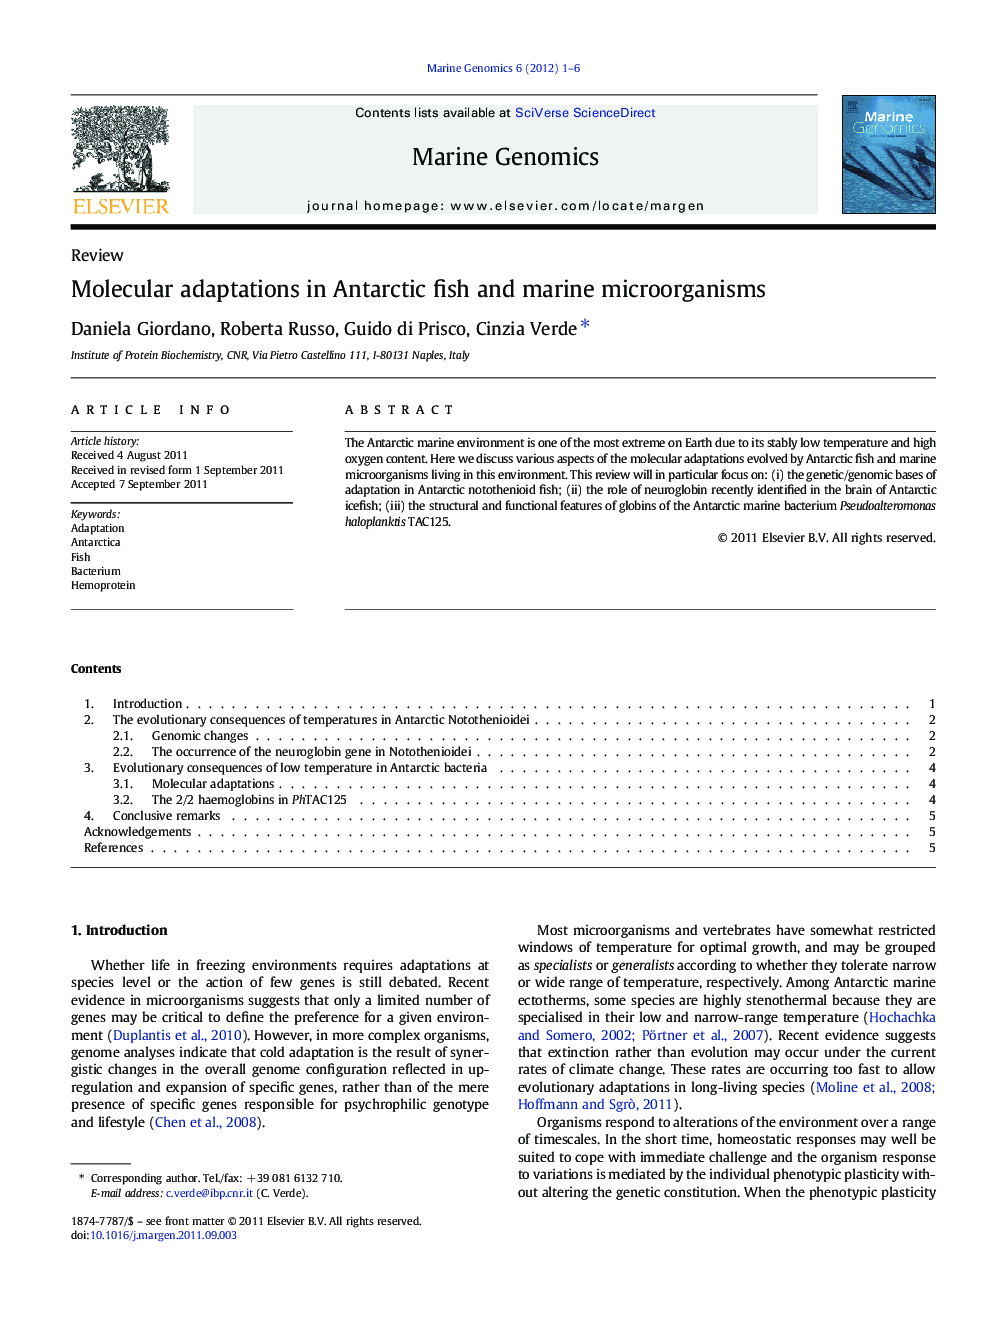 Molecular adaptations in Antarctic fish and marine microorganisms